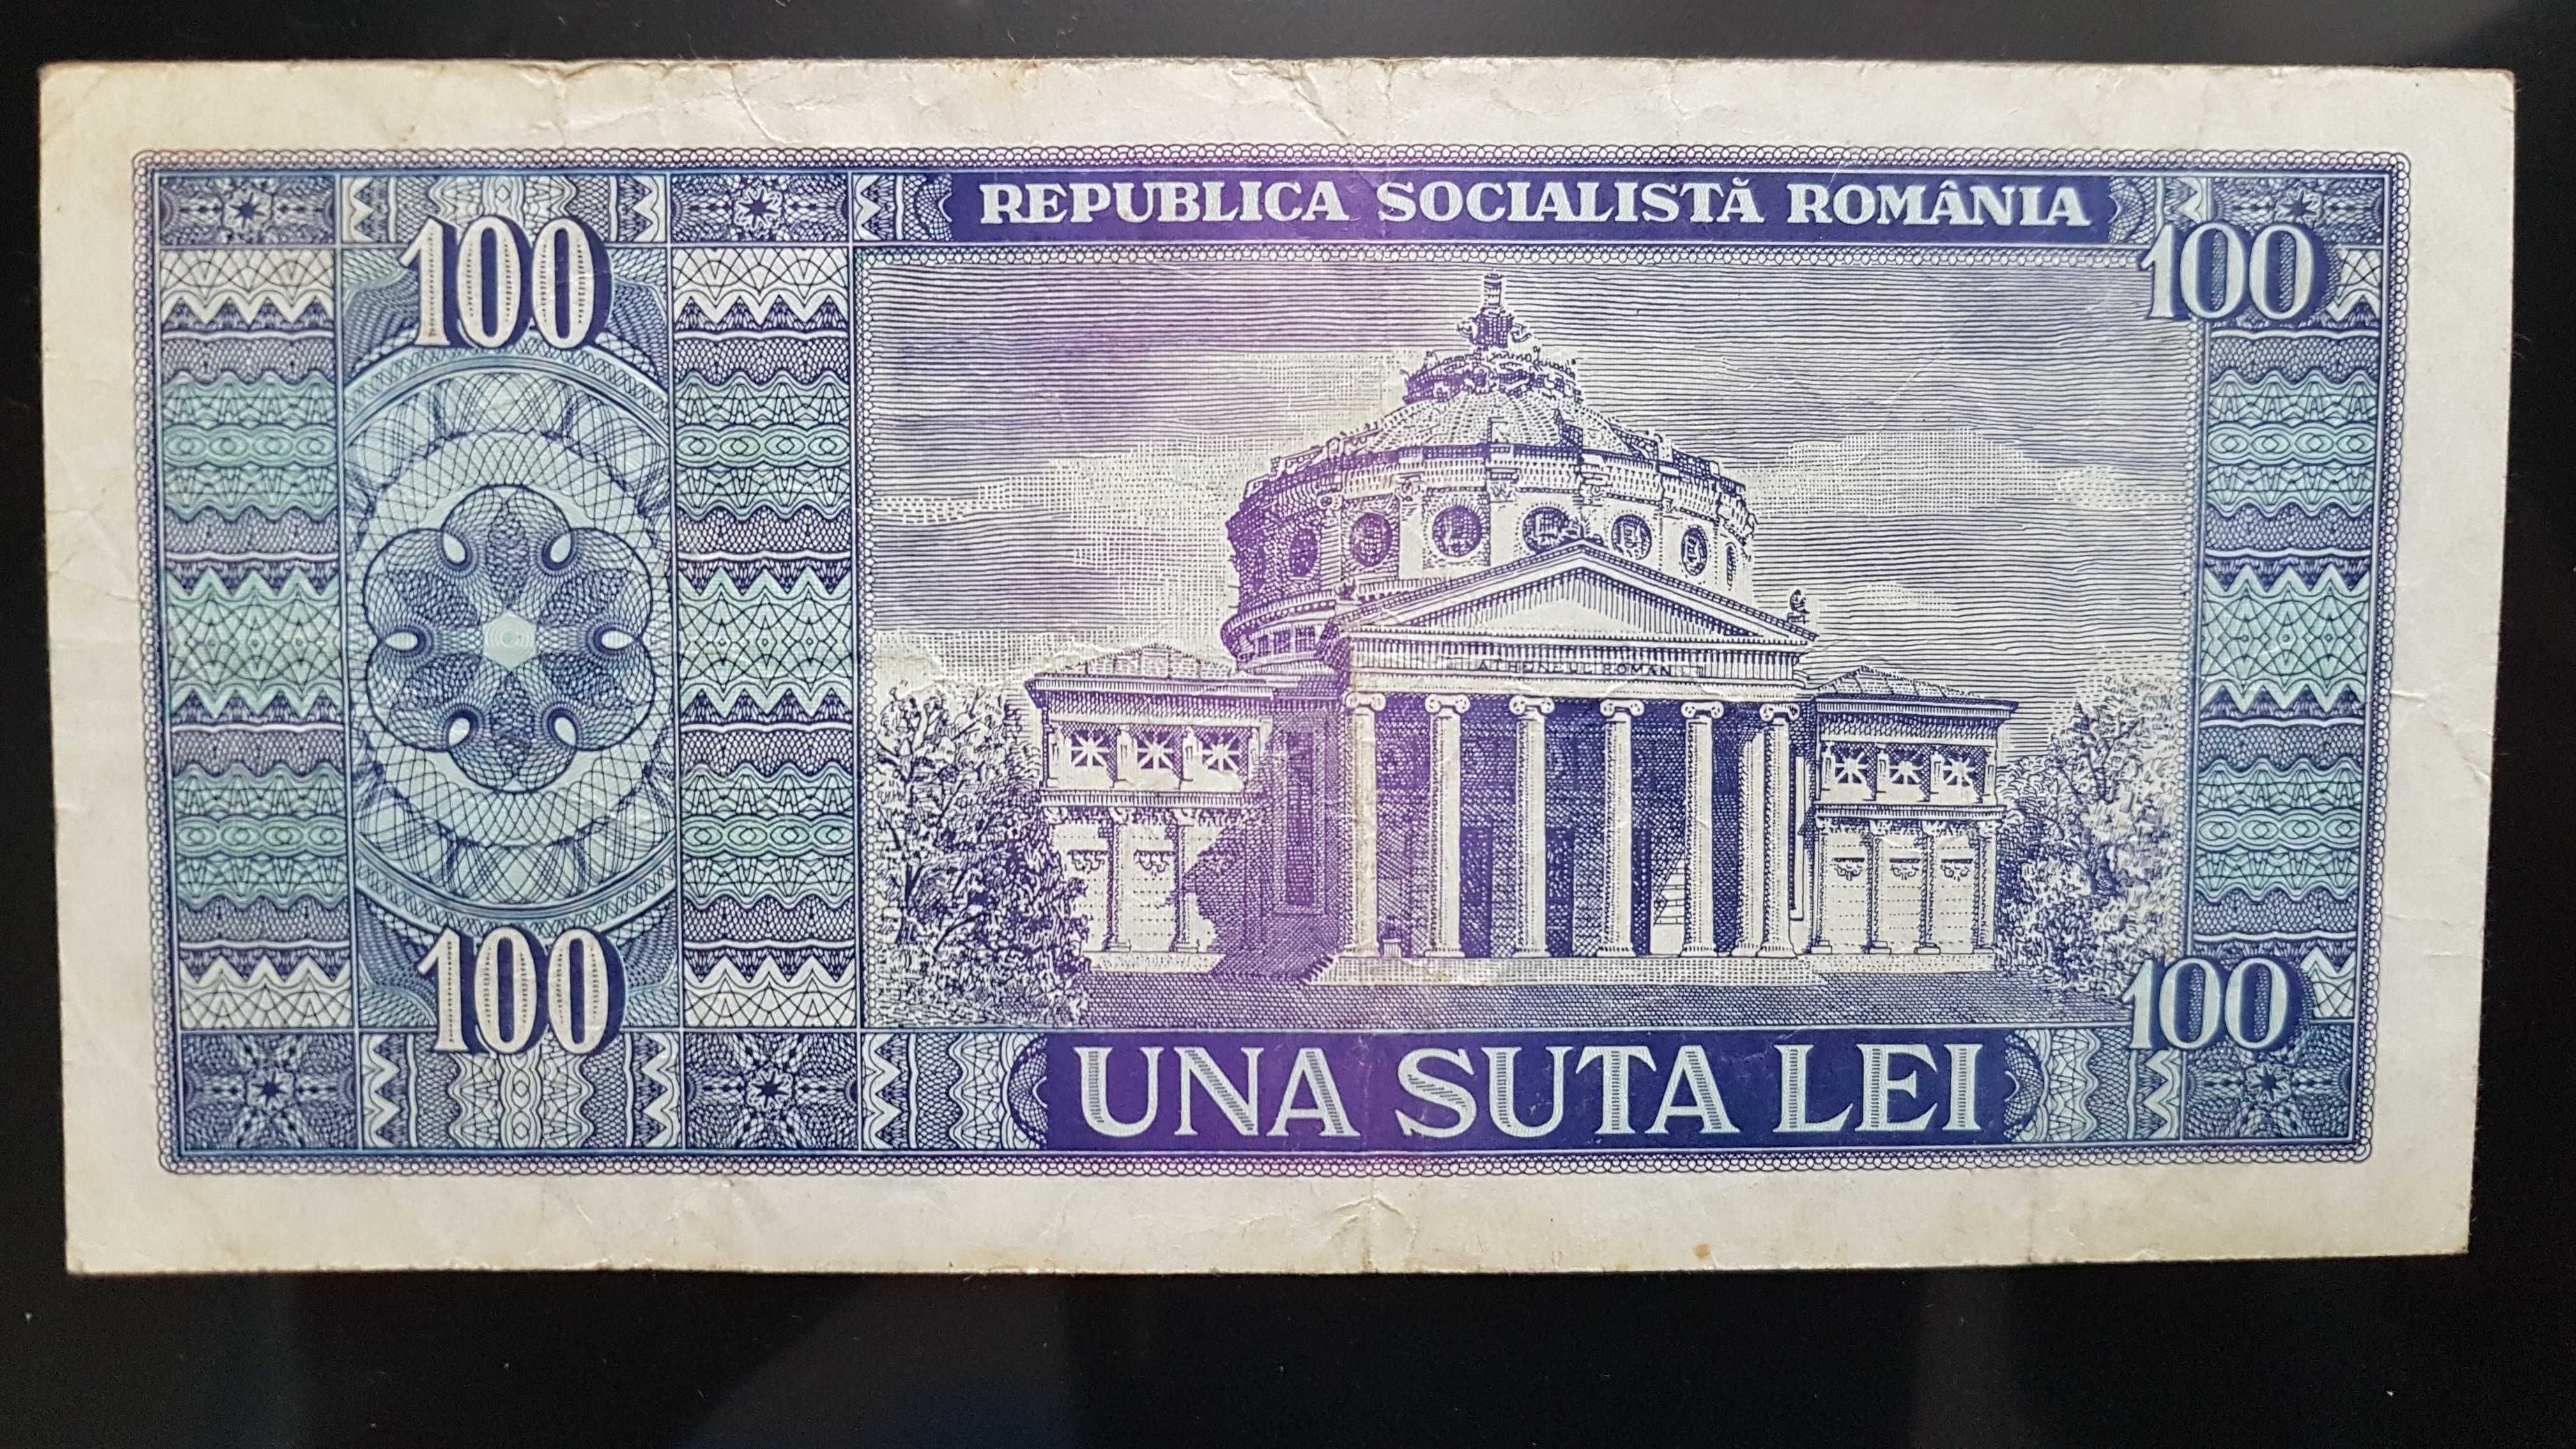 Bancnota de 100 lei din 1966